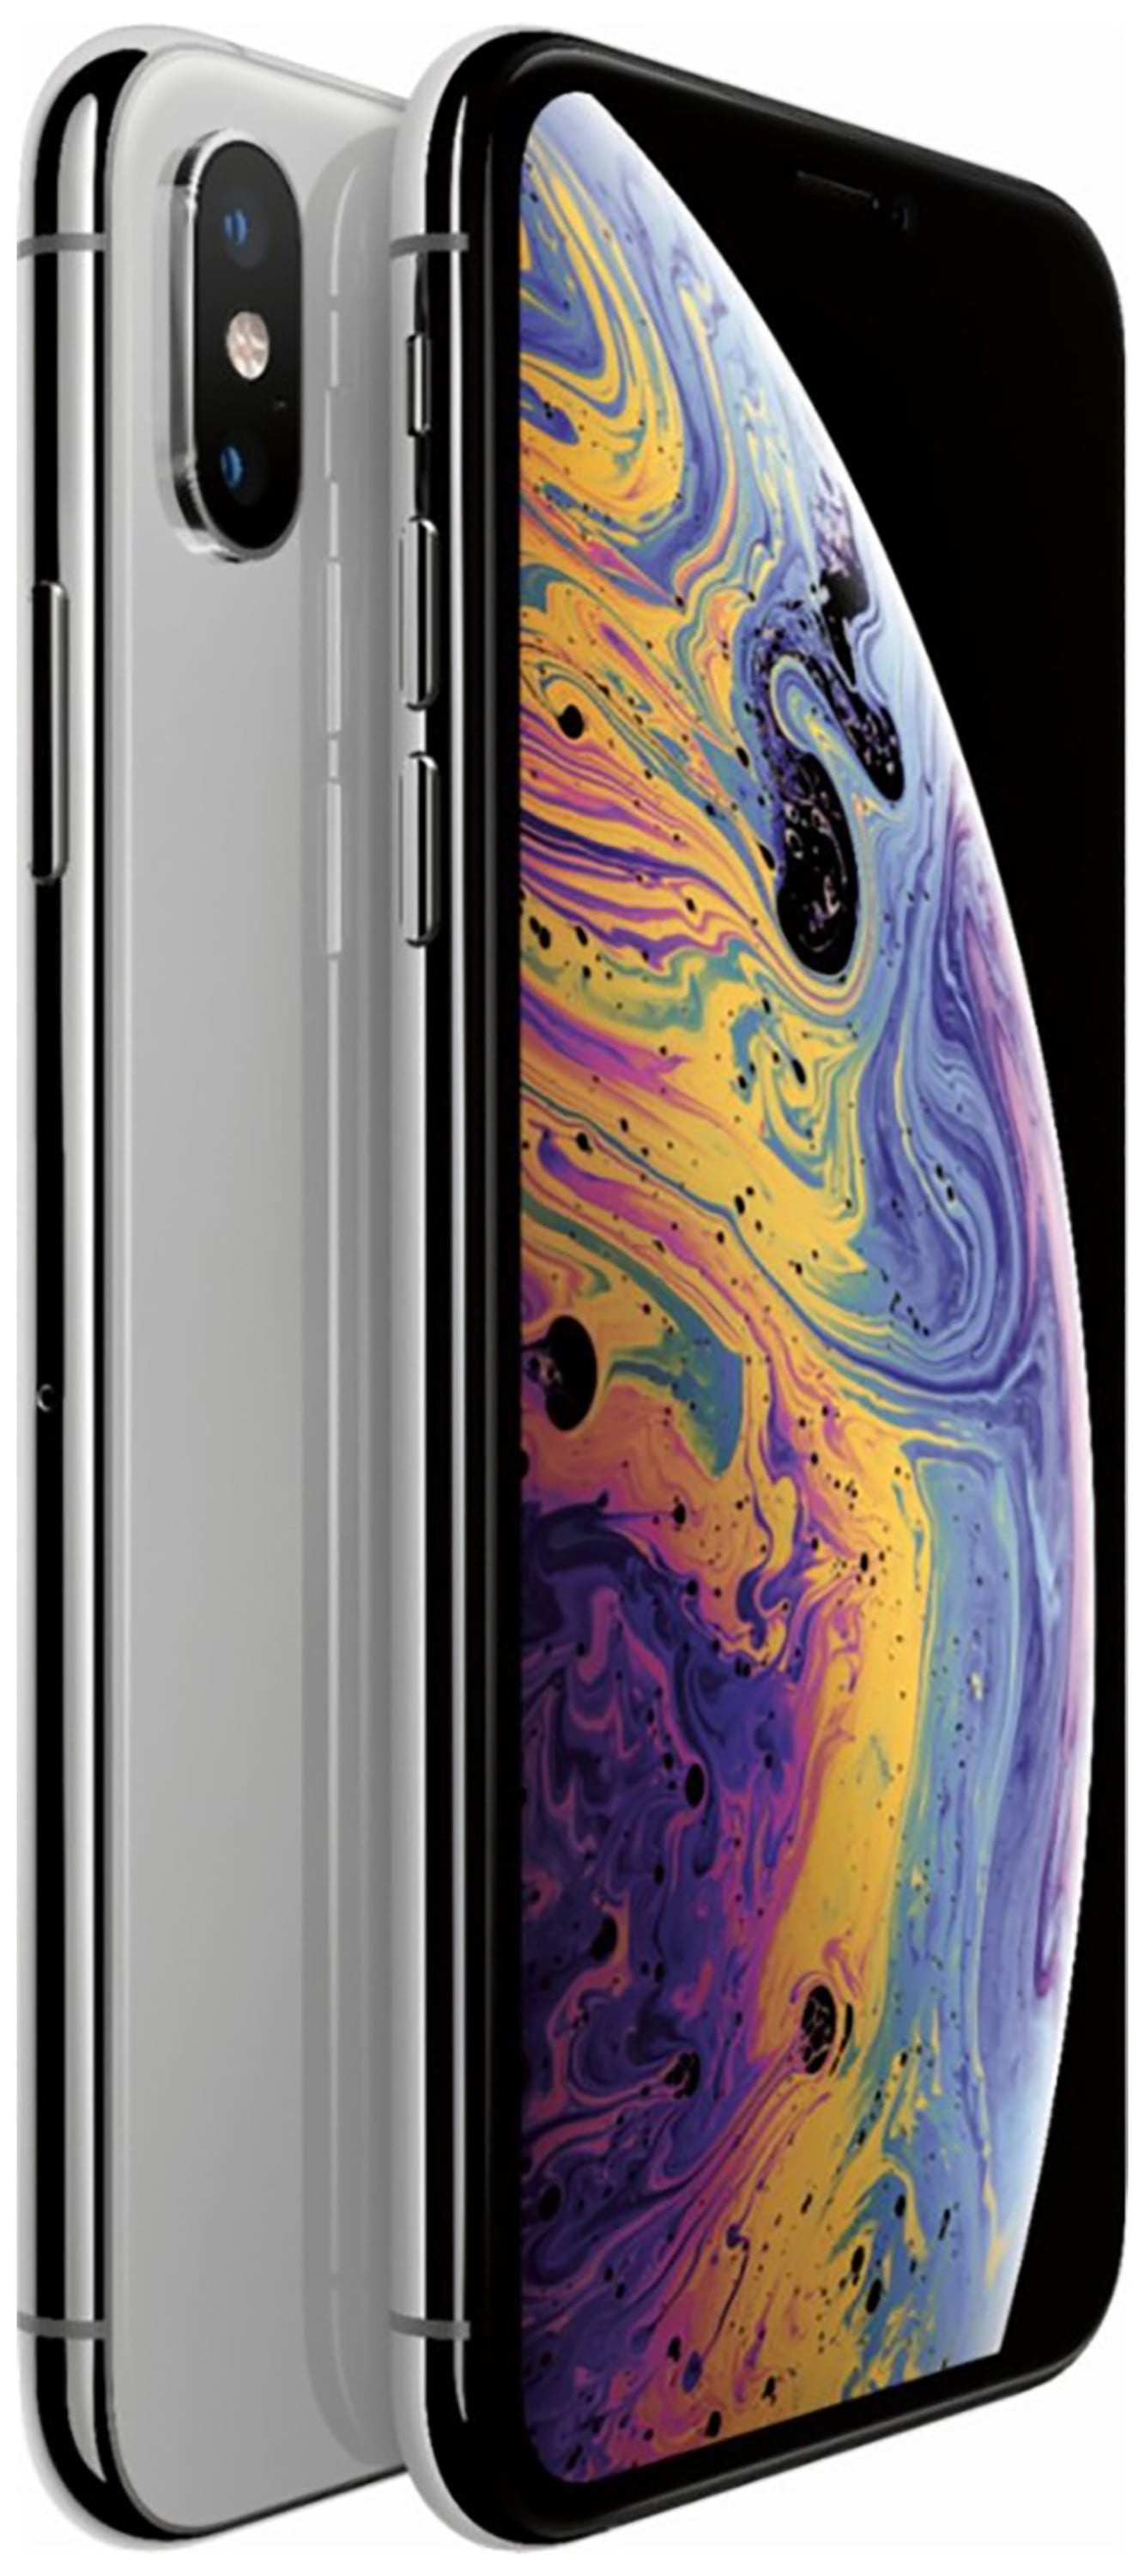 Apple iPhone XS 64GB Fully Unlocked (Verizon + Sprint + GSM Unlocked) -  Space Gray (Used)